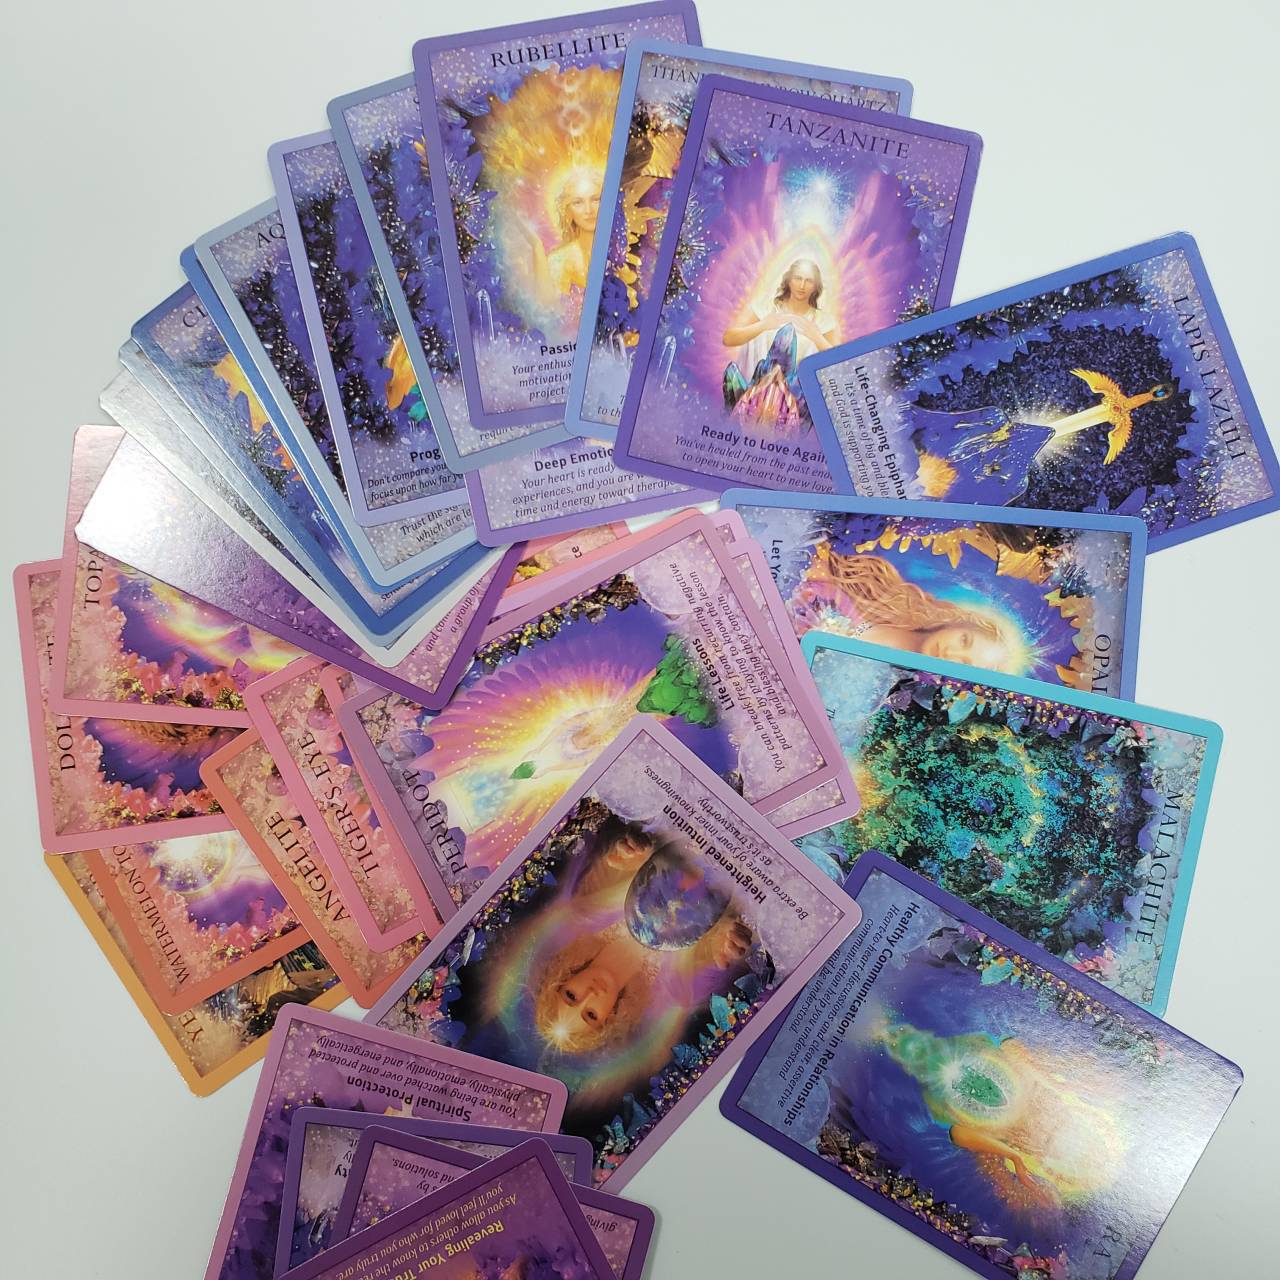 Bộ Bài Bói Tarot Crystal Angels Oracle Card Deck Cao Cấp Đẹp